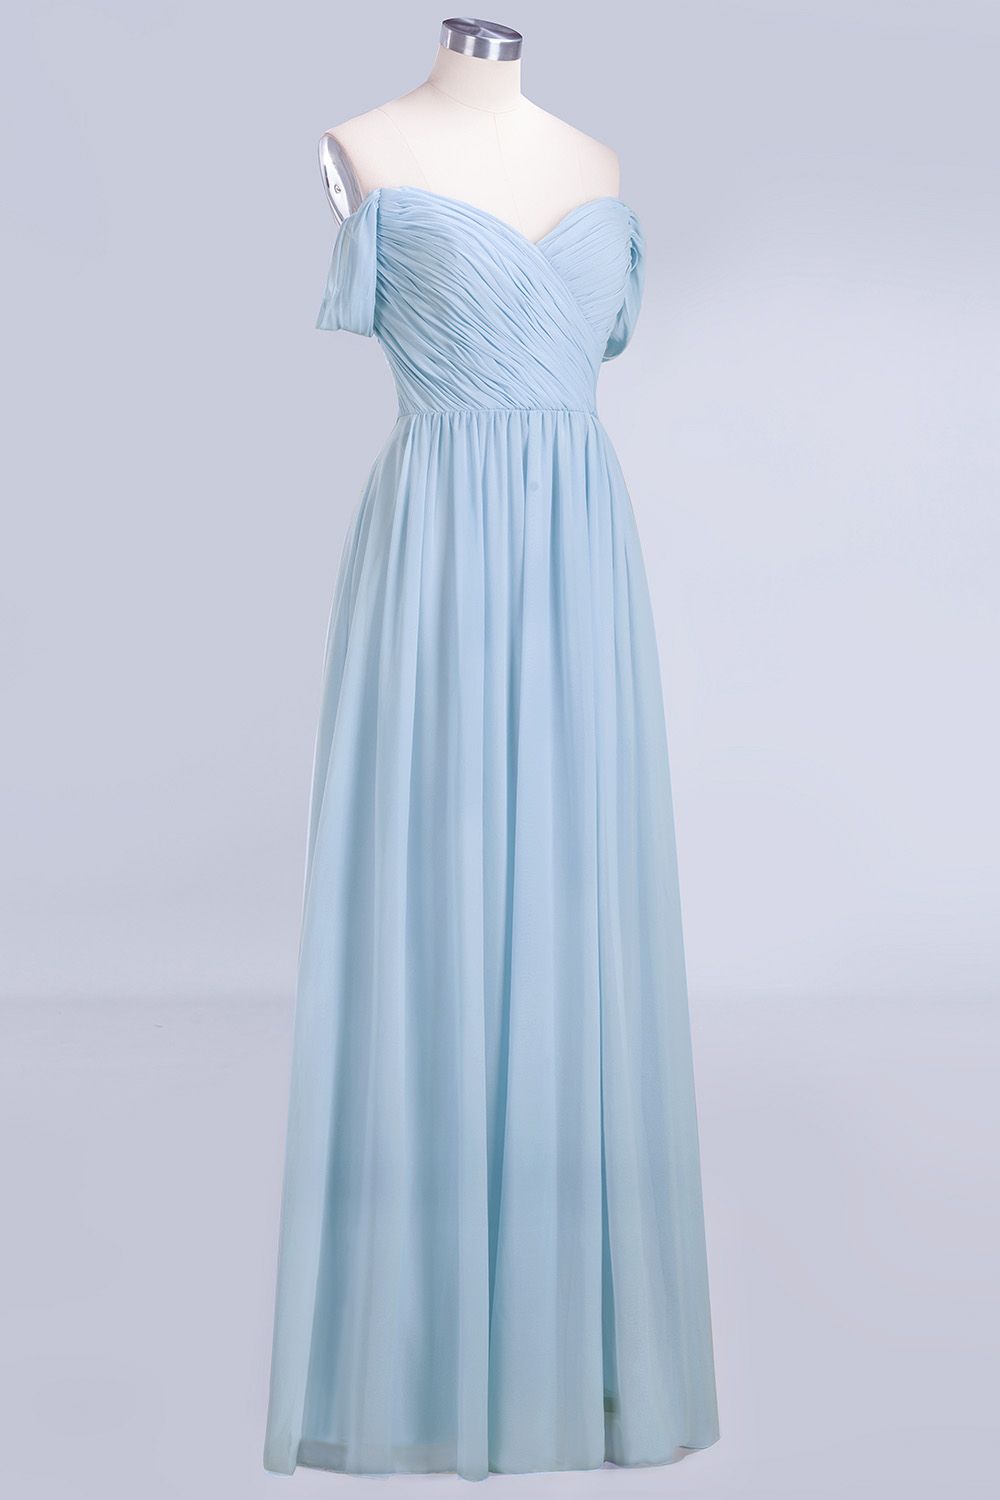 Modest Chiffon Sweetheart Sleeveless Affordable Bridesmaid Dresses with Ruffles-27dress